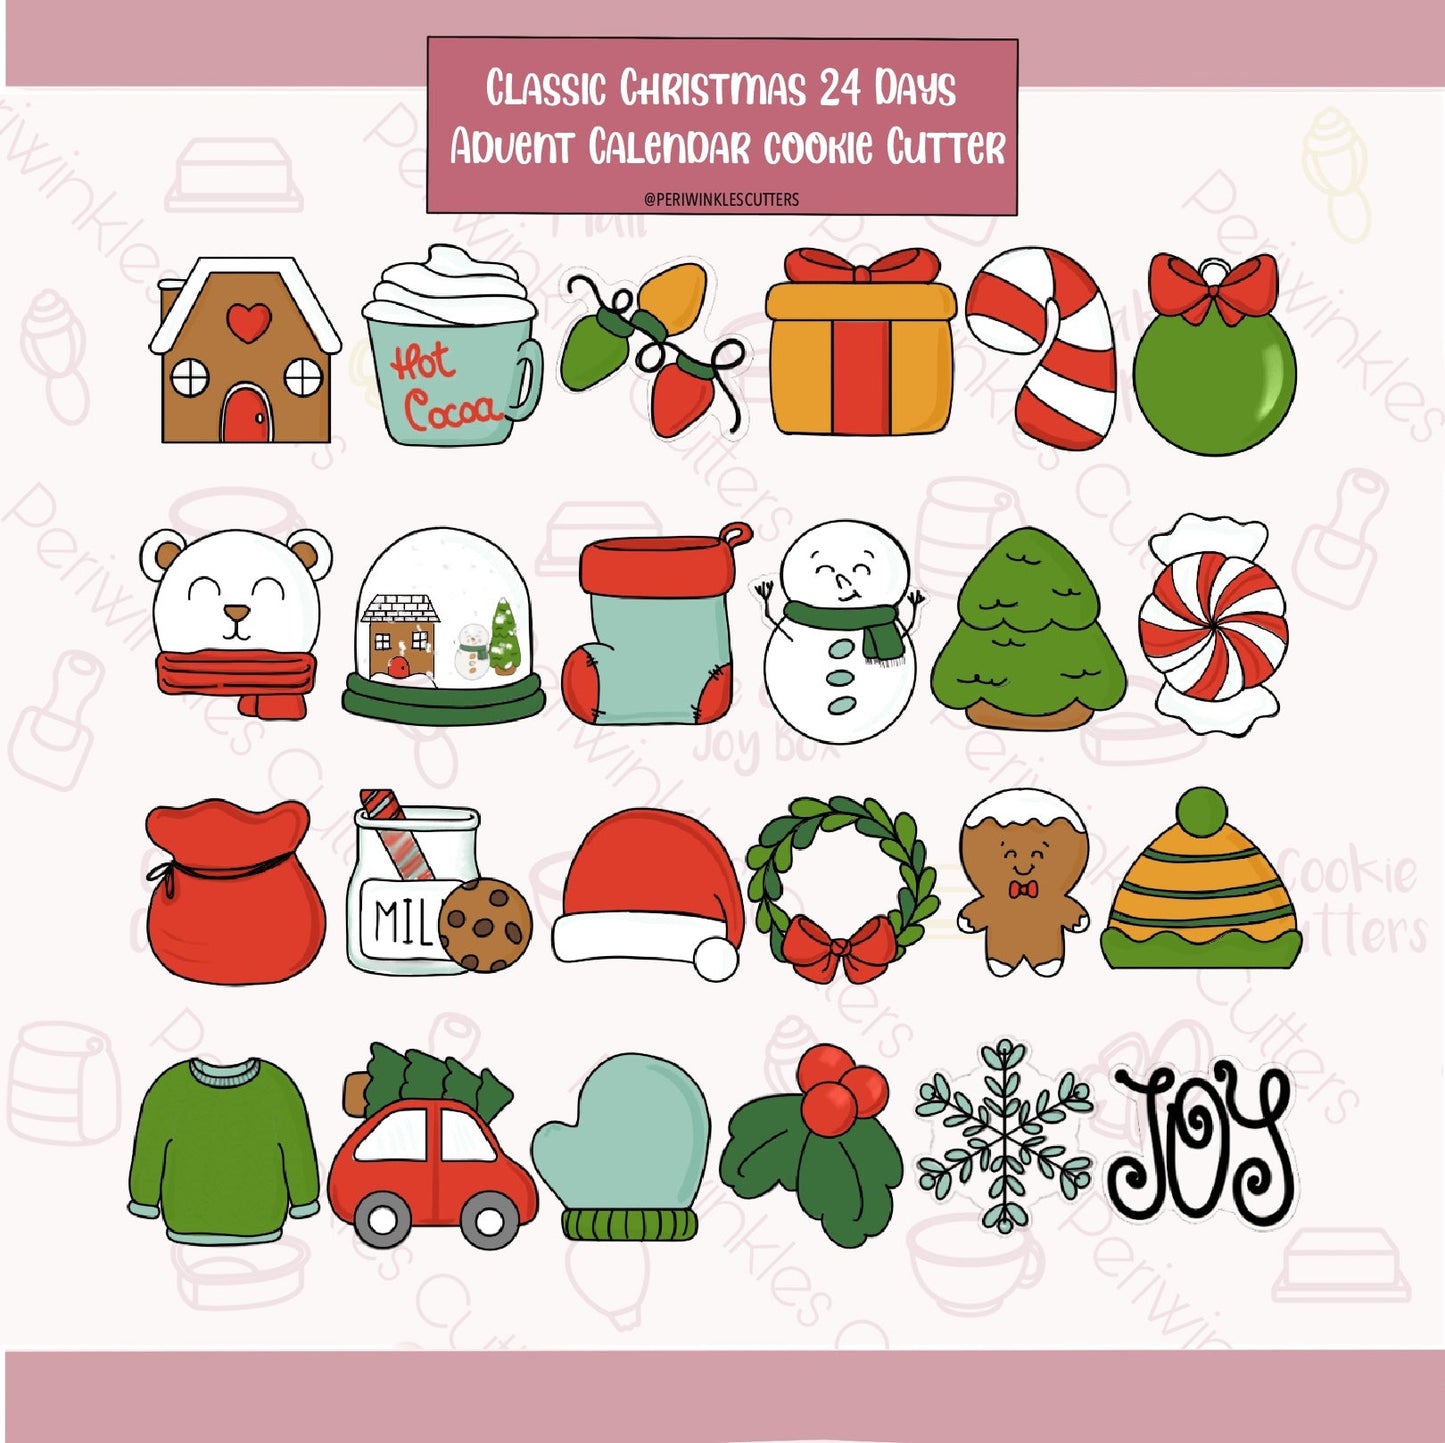 Classic Christmas 24 Mini Advent Calendar Cookie Cutter Set - Periwinkles Cutters